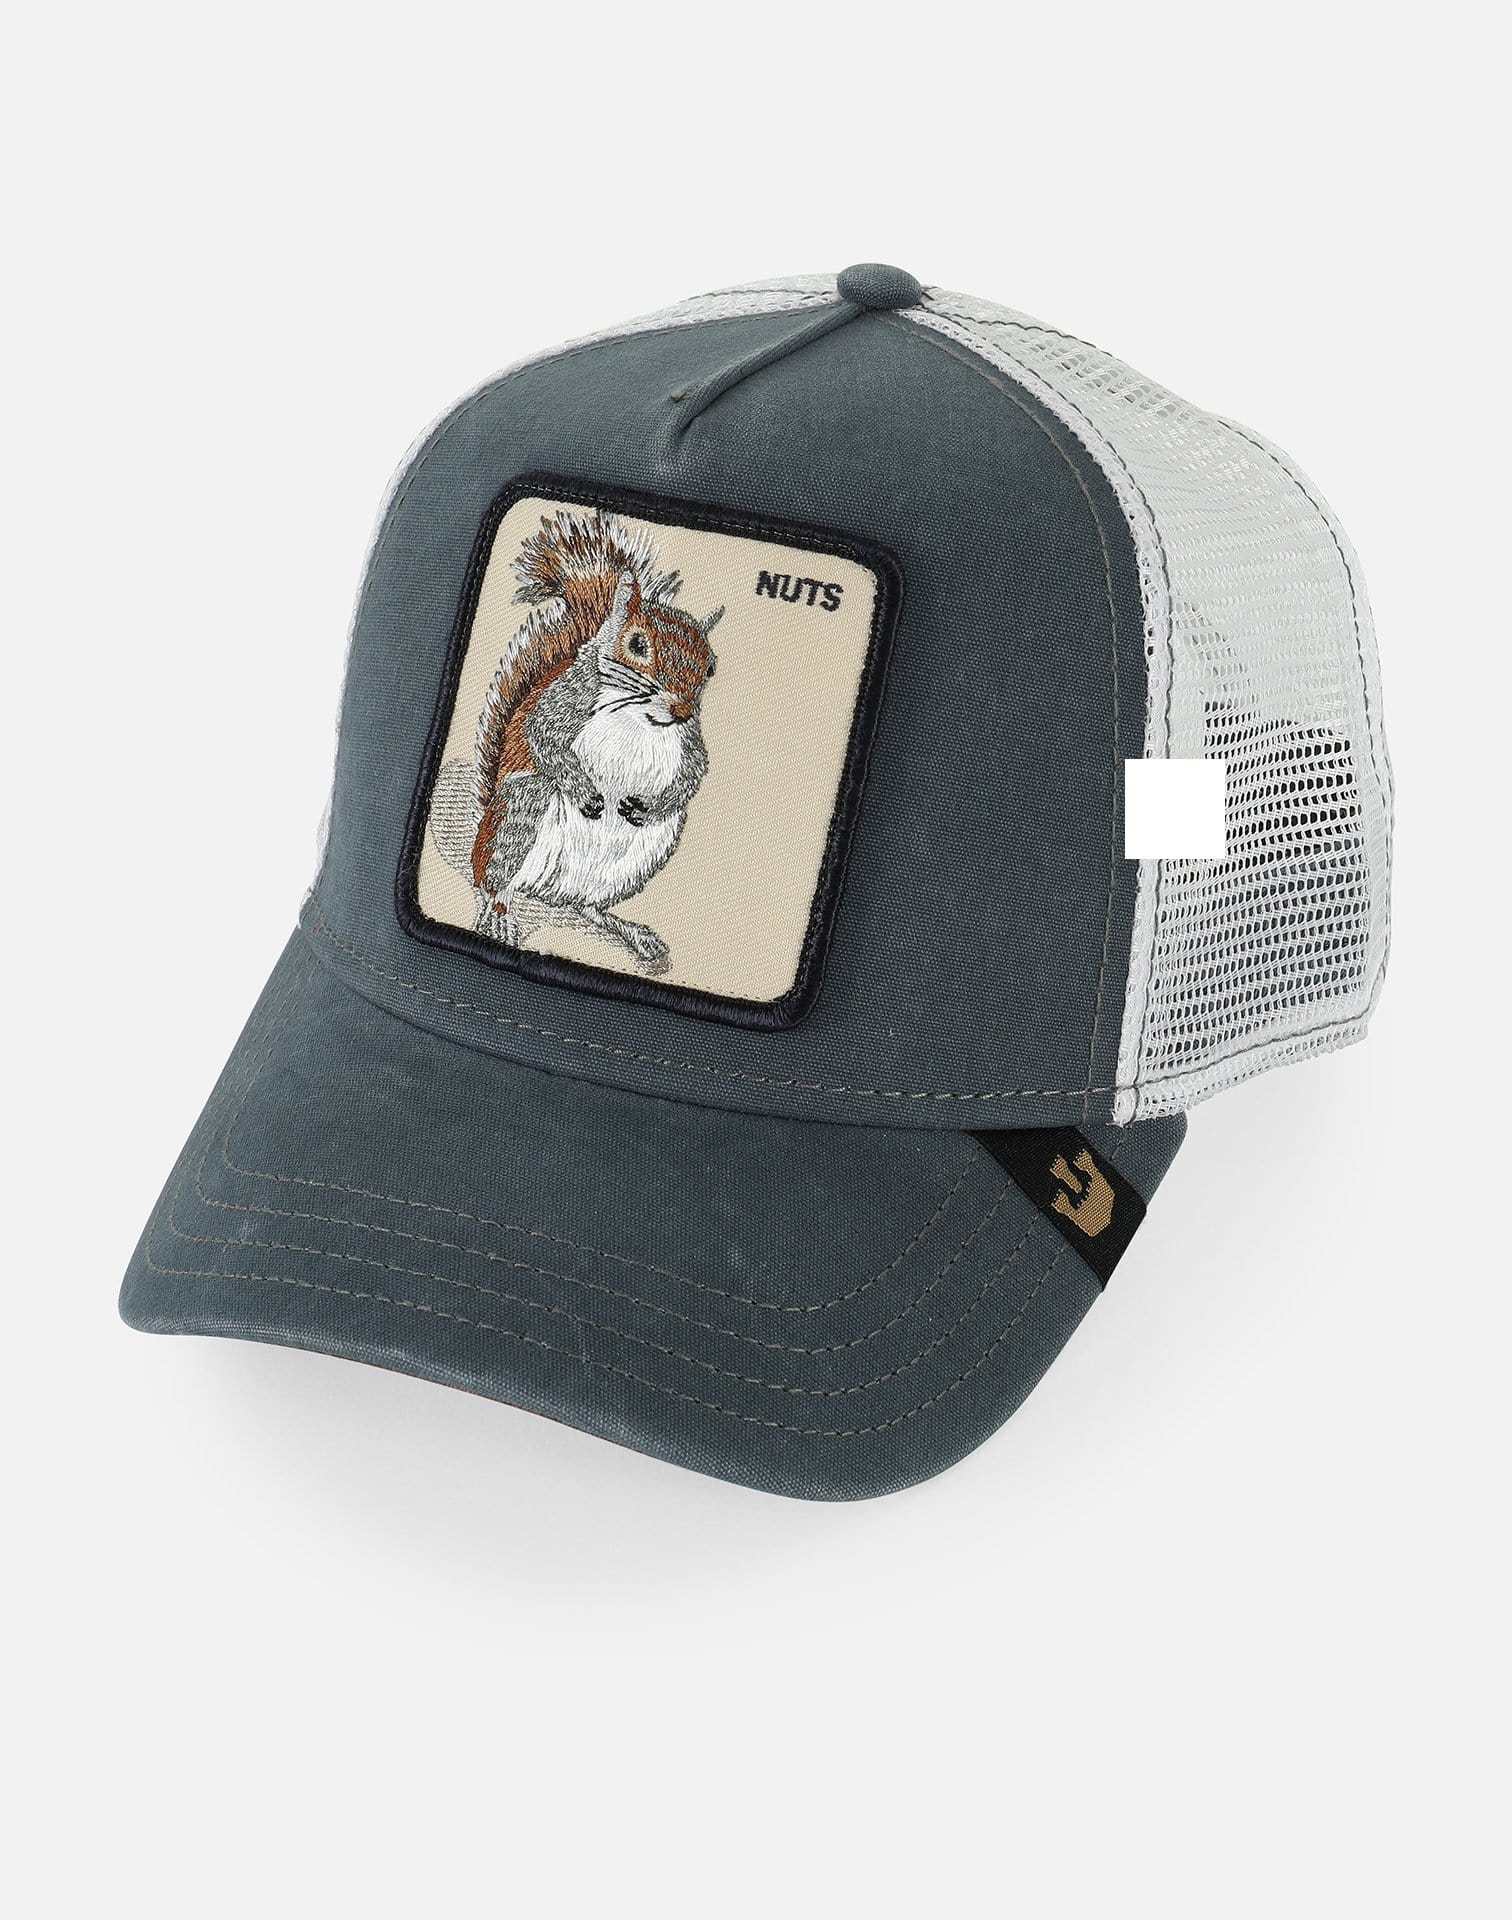 Goorin Brothers Squirrel Nuts Trucker Hat